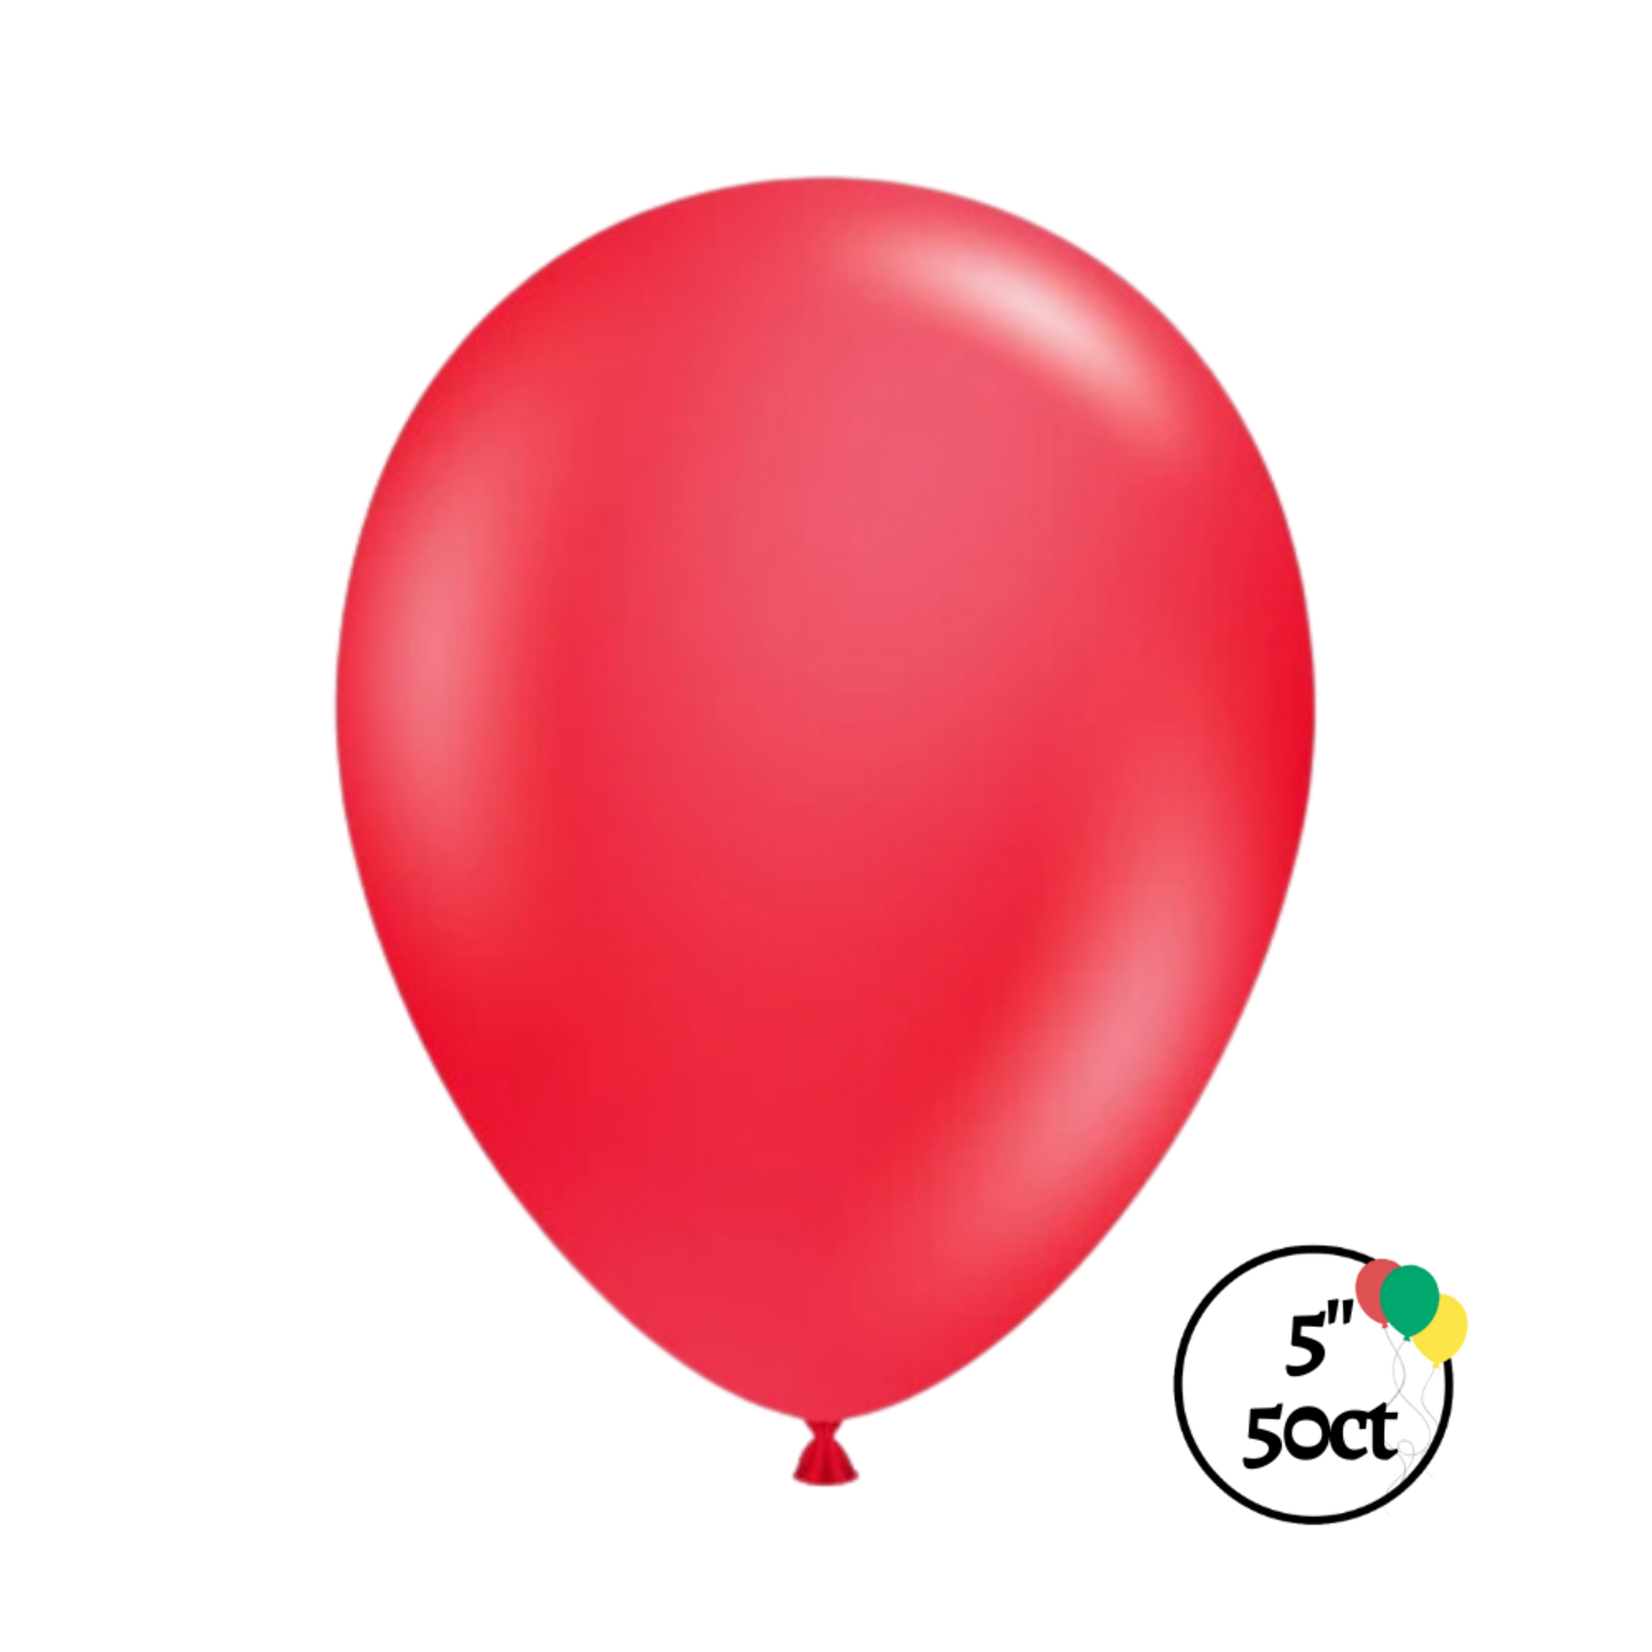 Tuftex 5" Tuftex Red Balloon 50ct.